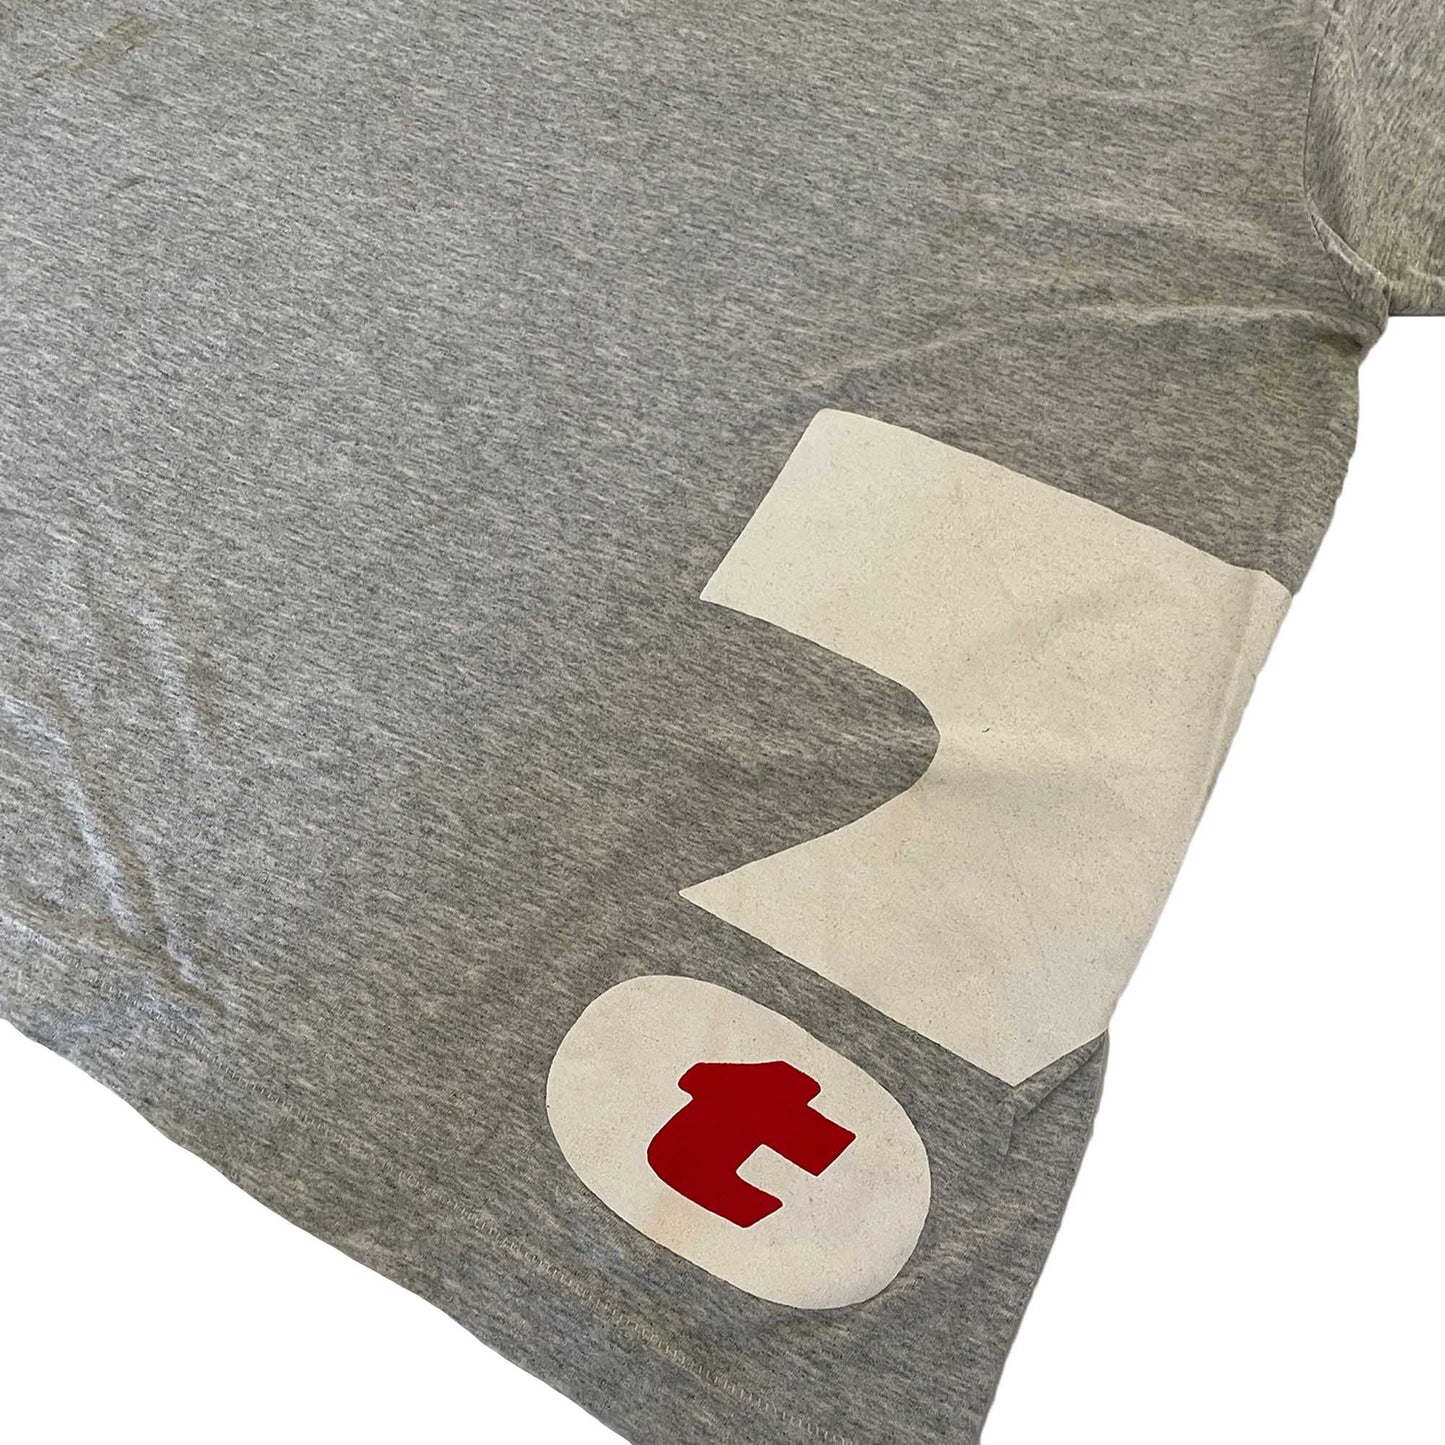 Tracker Trucks '?' Single Stitched T-Shirt (Grey) VINTAGE 90s